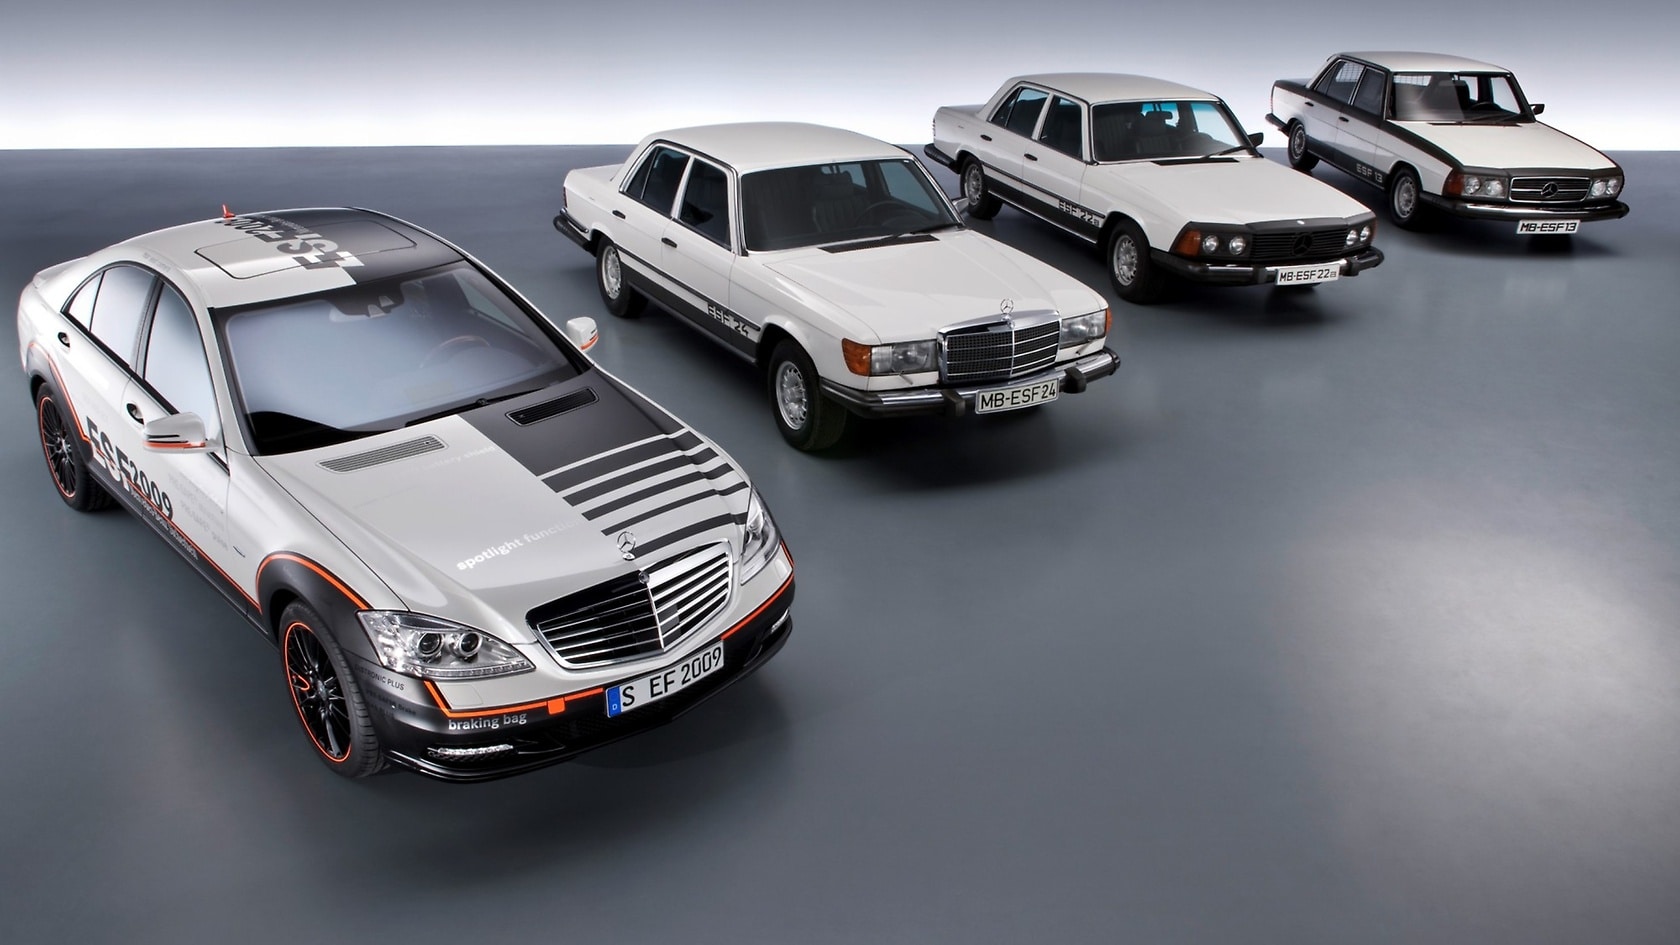 Mercedes-Benz Experimental Safety Vehicles ESV 2009 (2009), ESV 24 (1974), ESV 22a (1973), ESV 13 (1972) – l. to r.